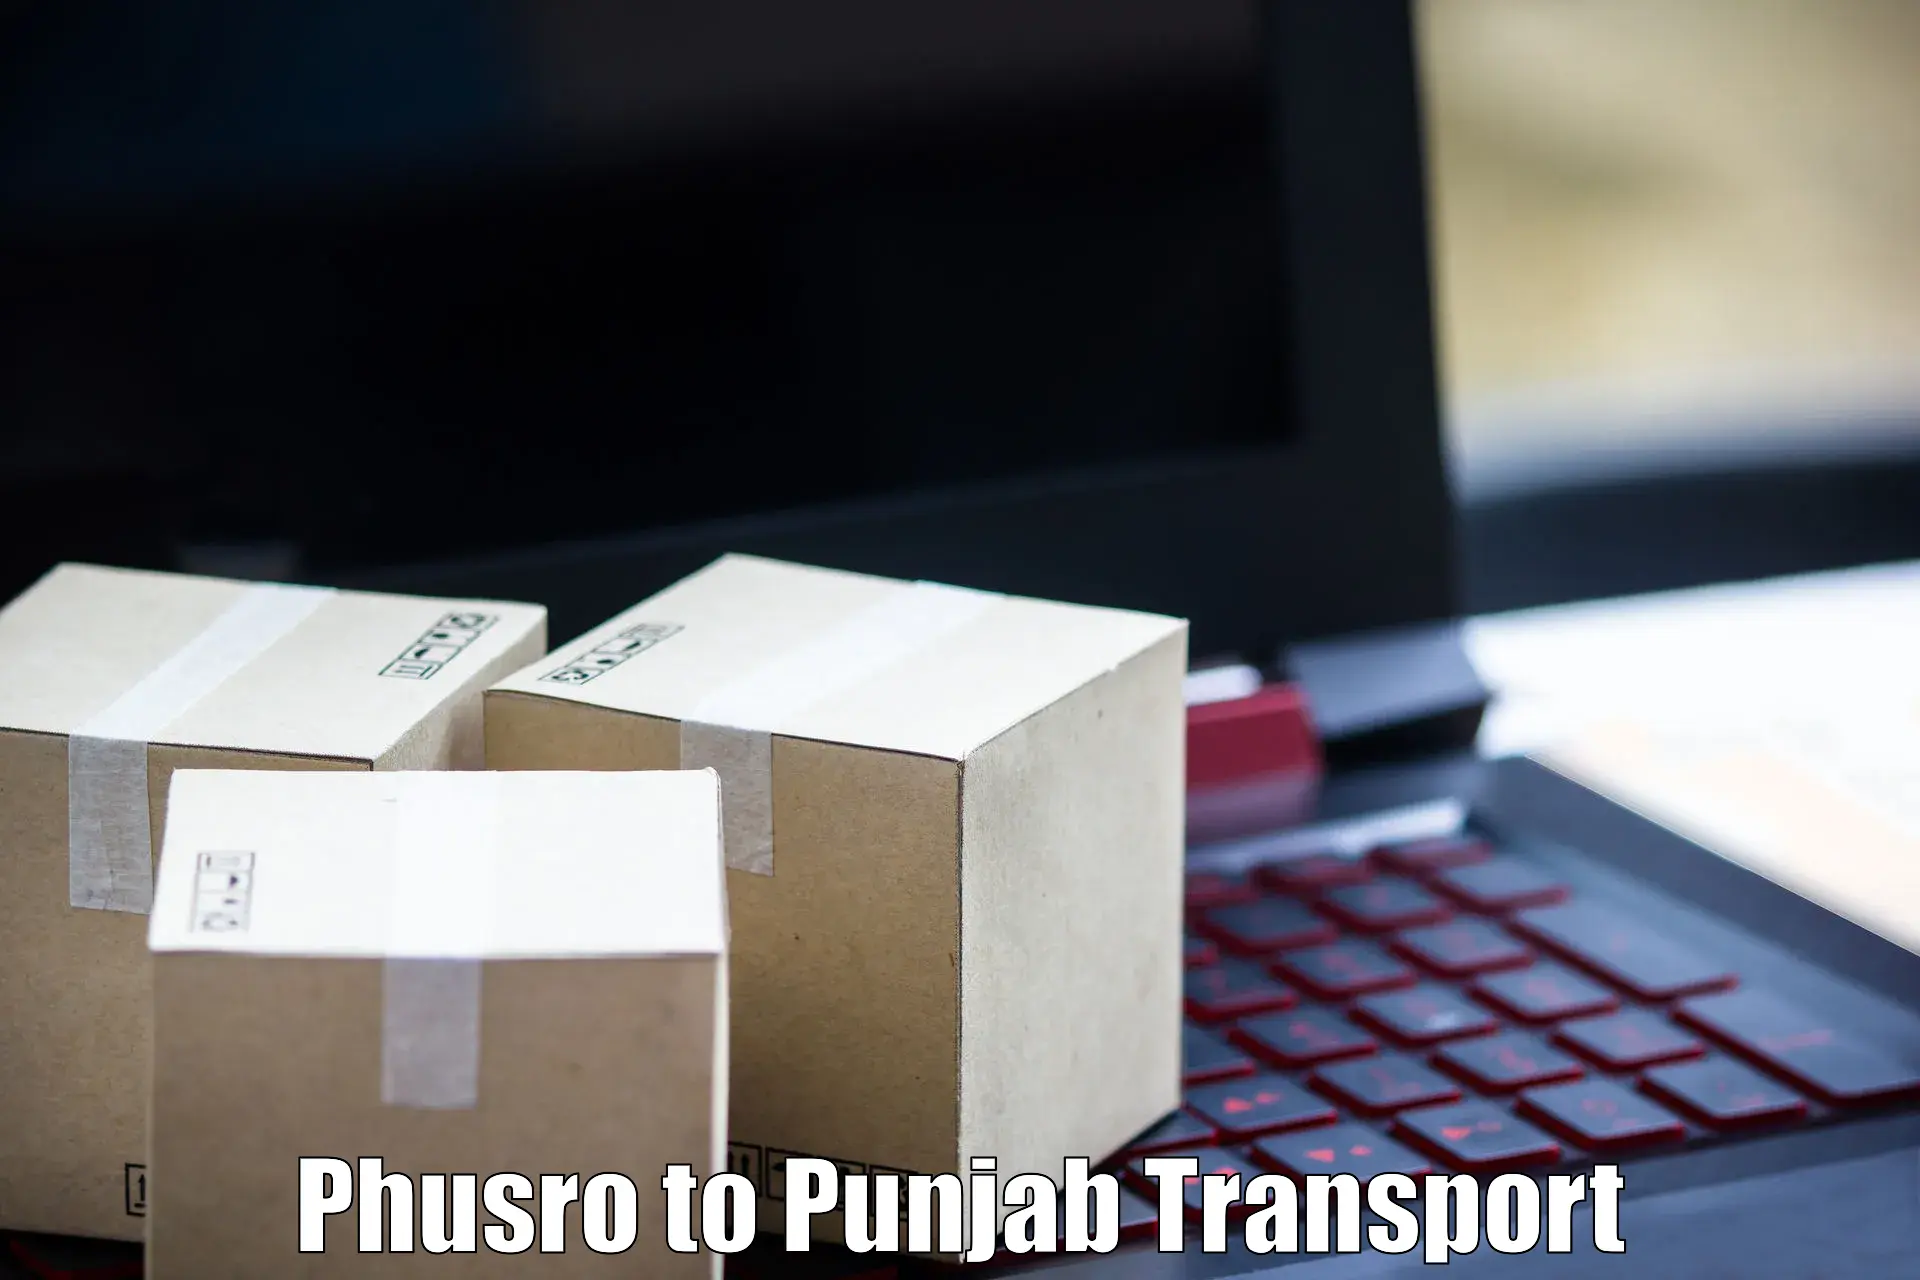 Nearby transport service Phusro to Punjab